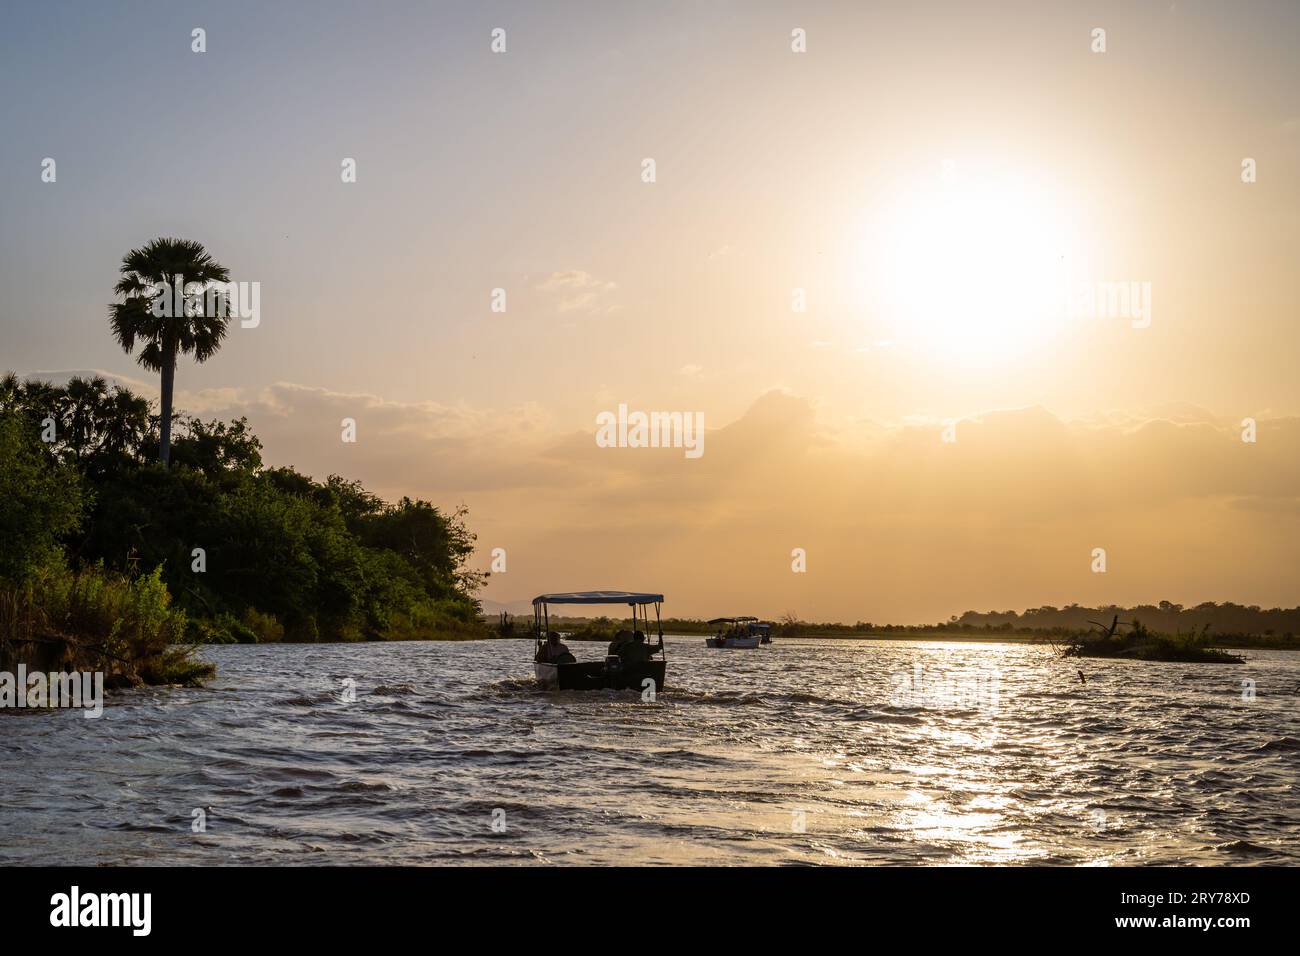 Boat safari on Rufiji River at Sunset in Tanzania Stock Photo